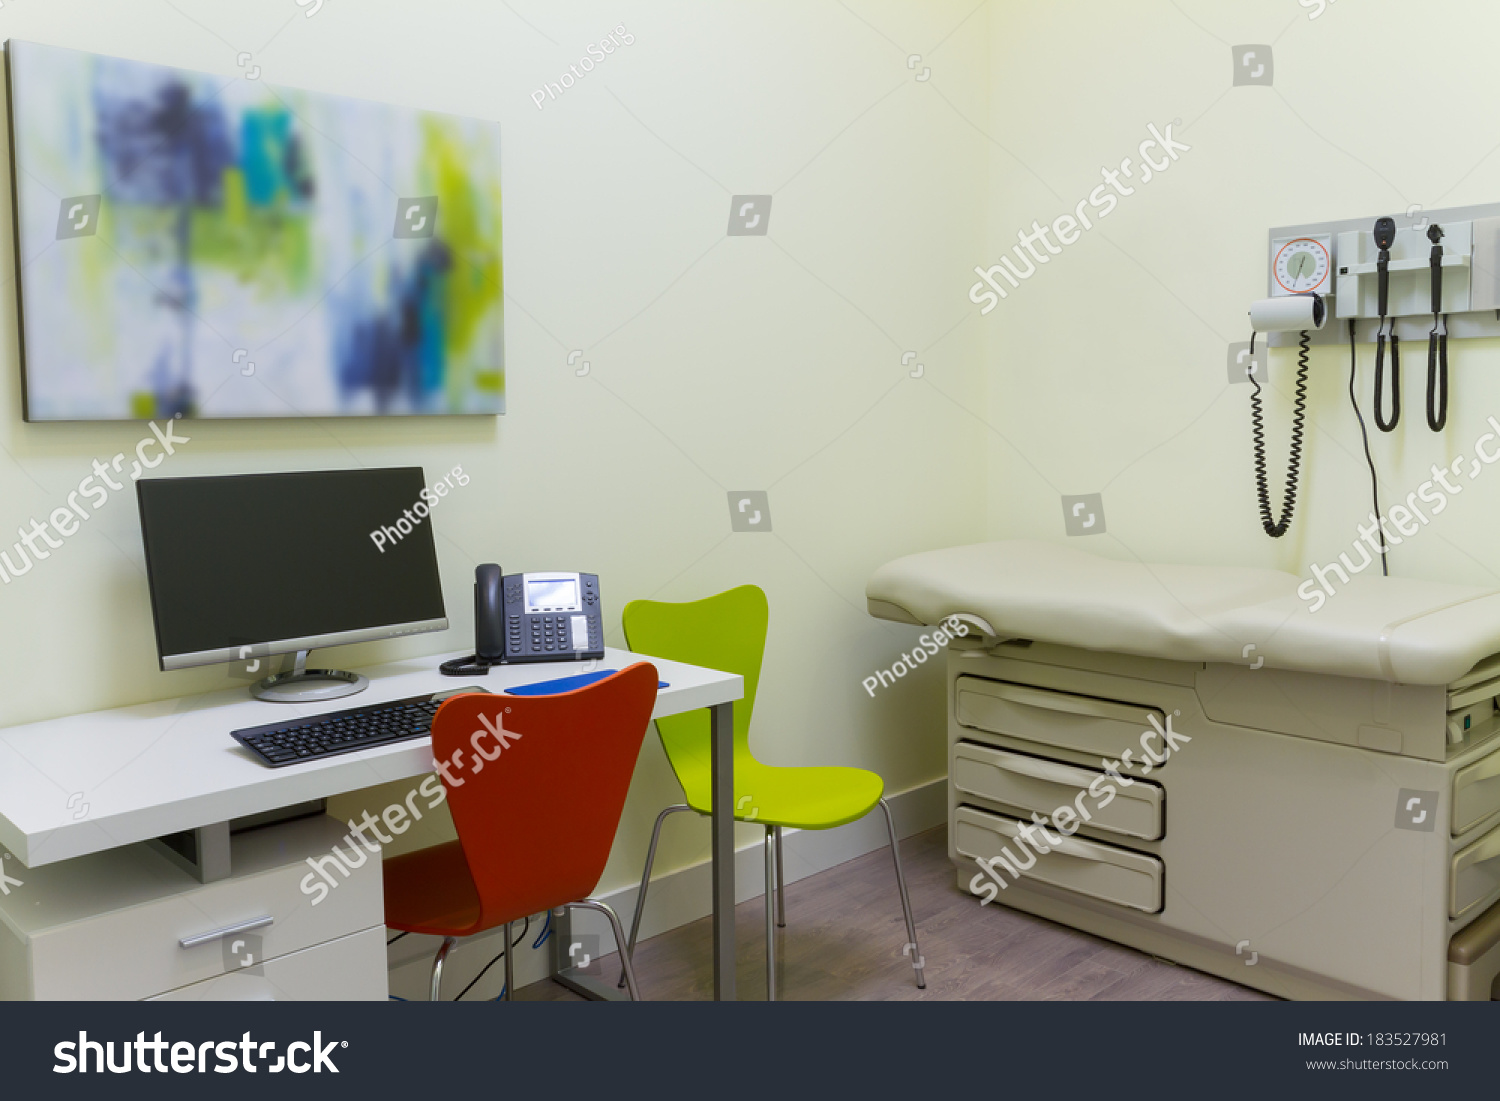 Doctor Office Interior Design Stock Photo 183527981 ...